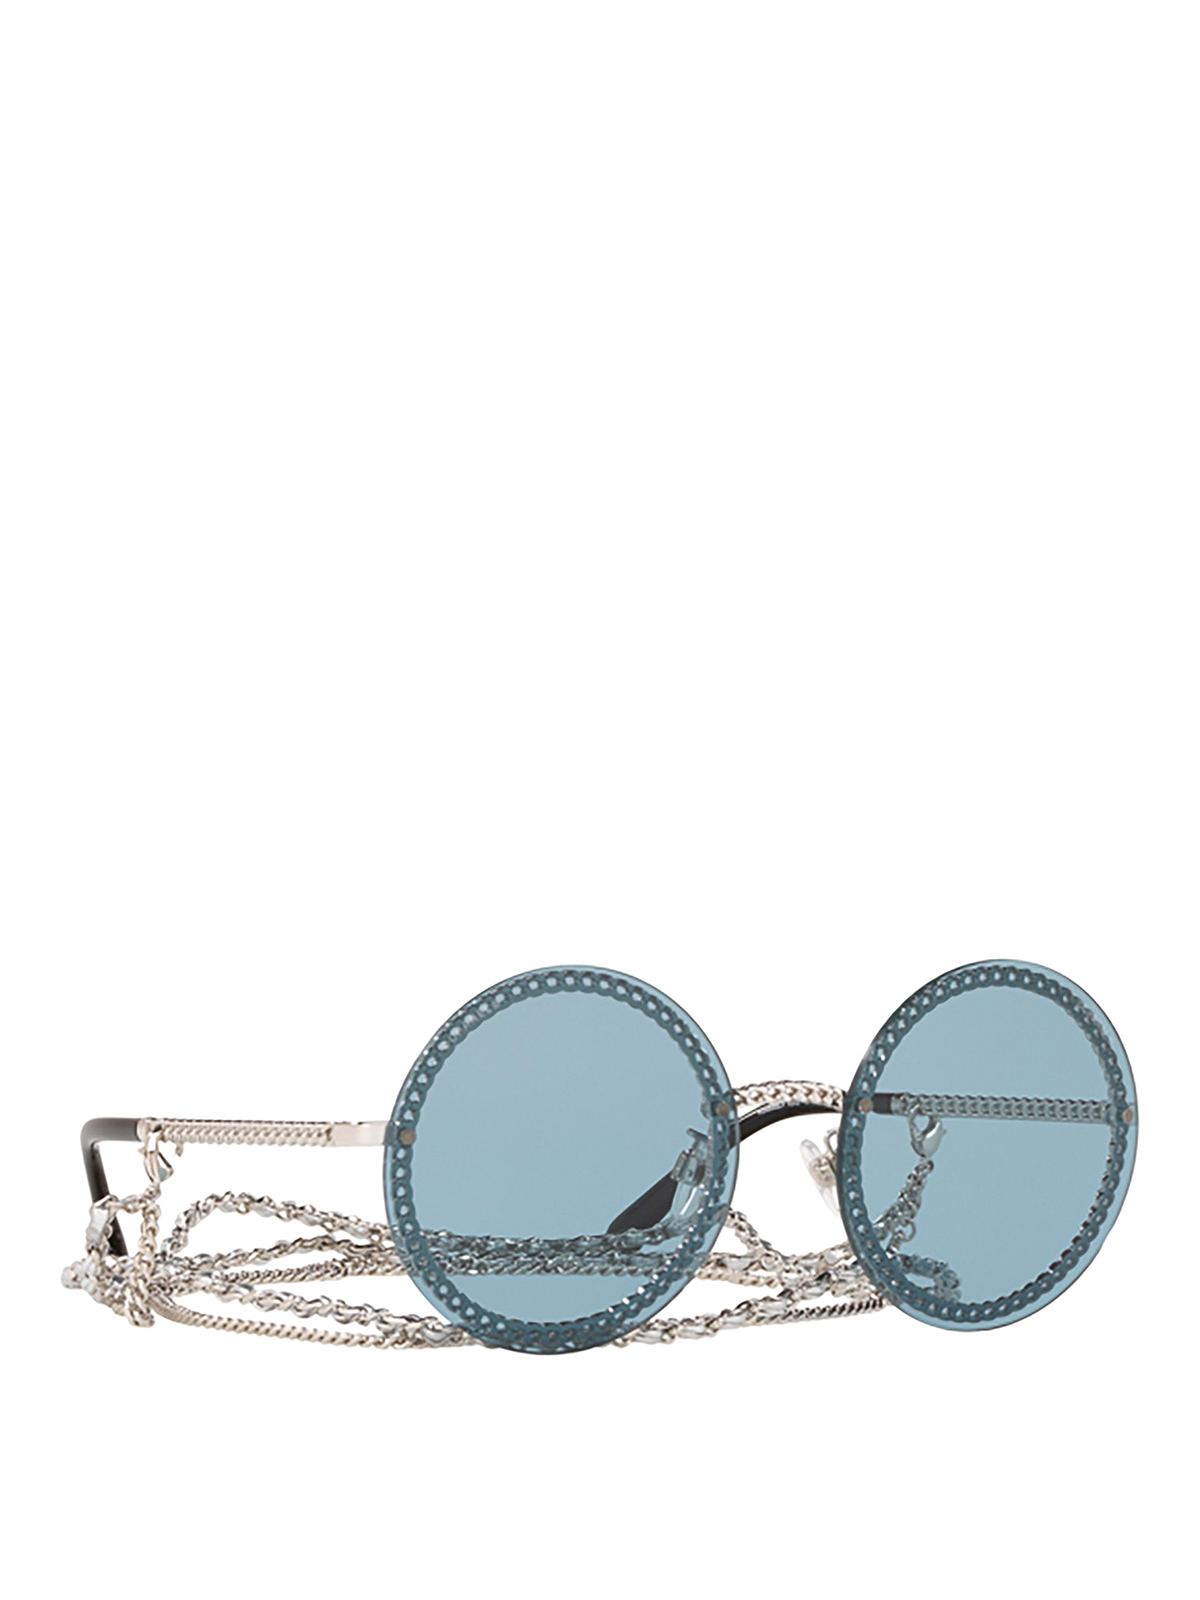 CHANEL Spring 2019 Sunglasses  Sandras Closet